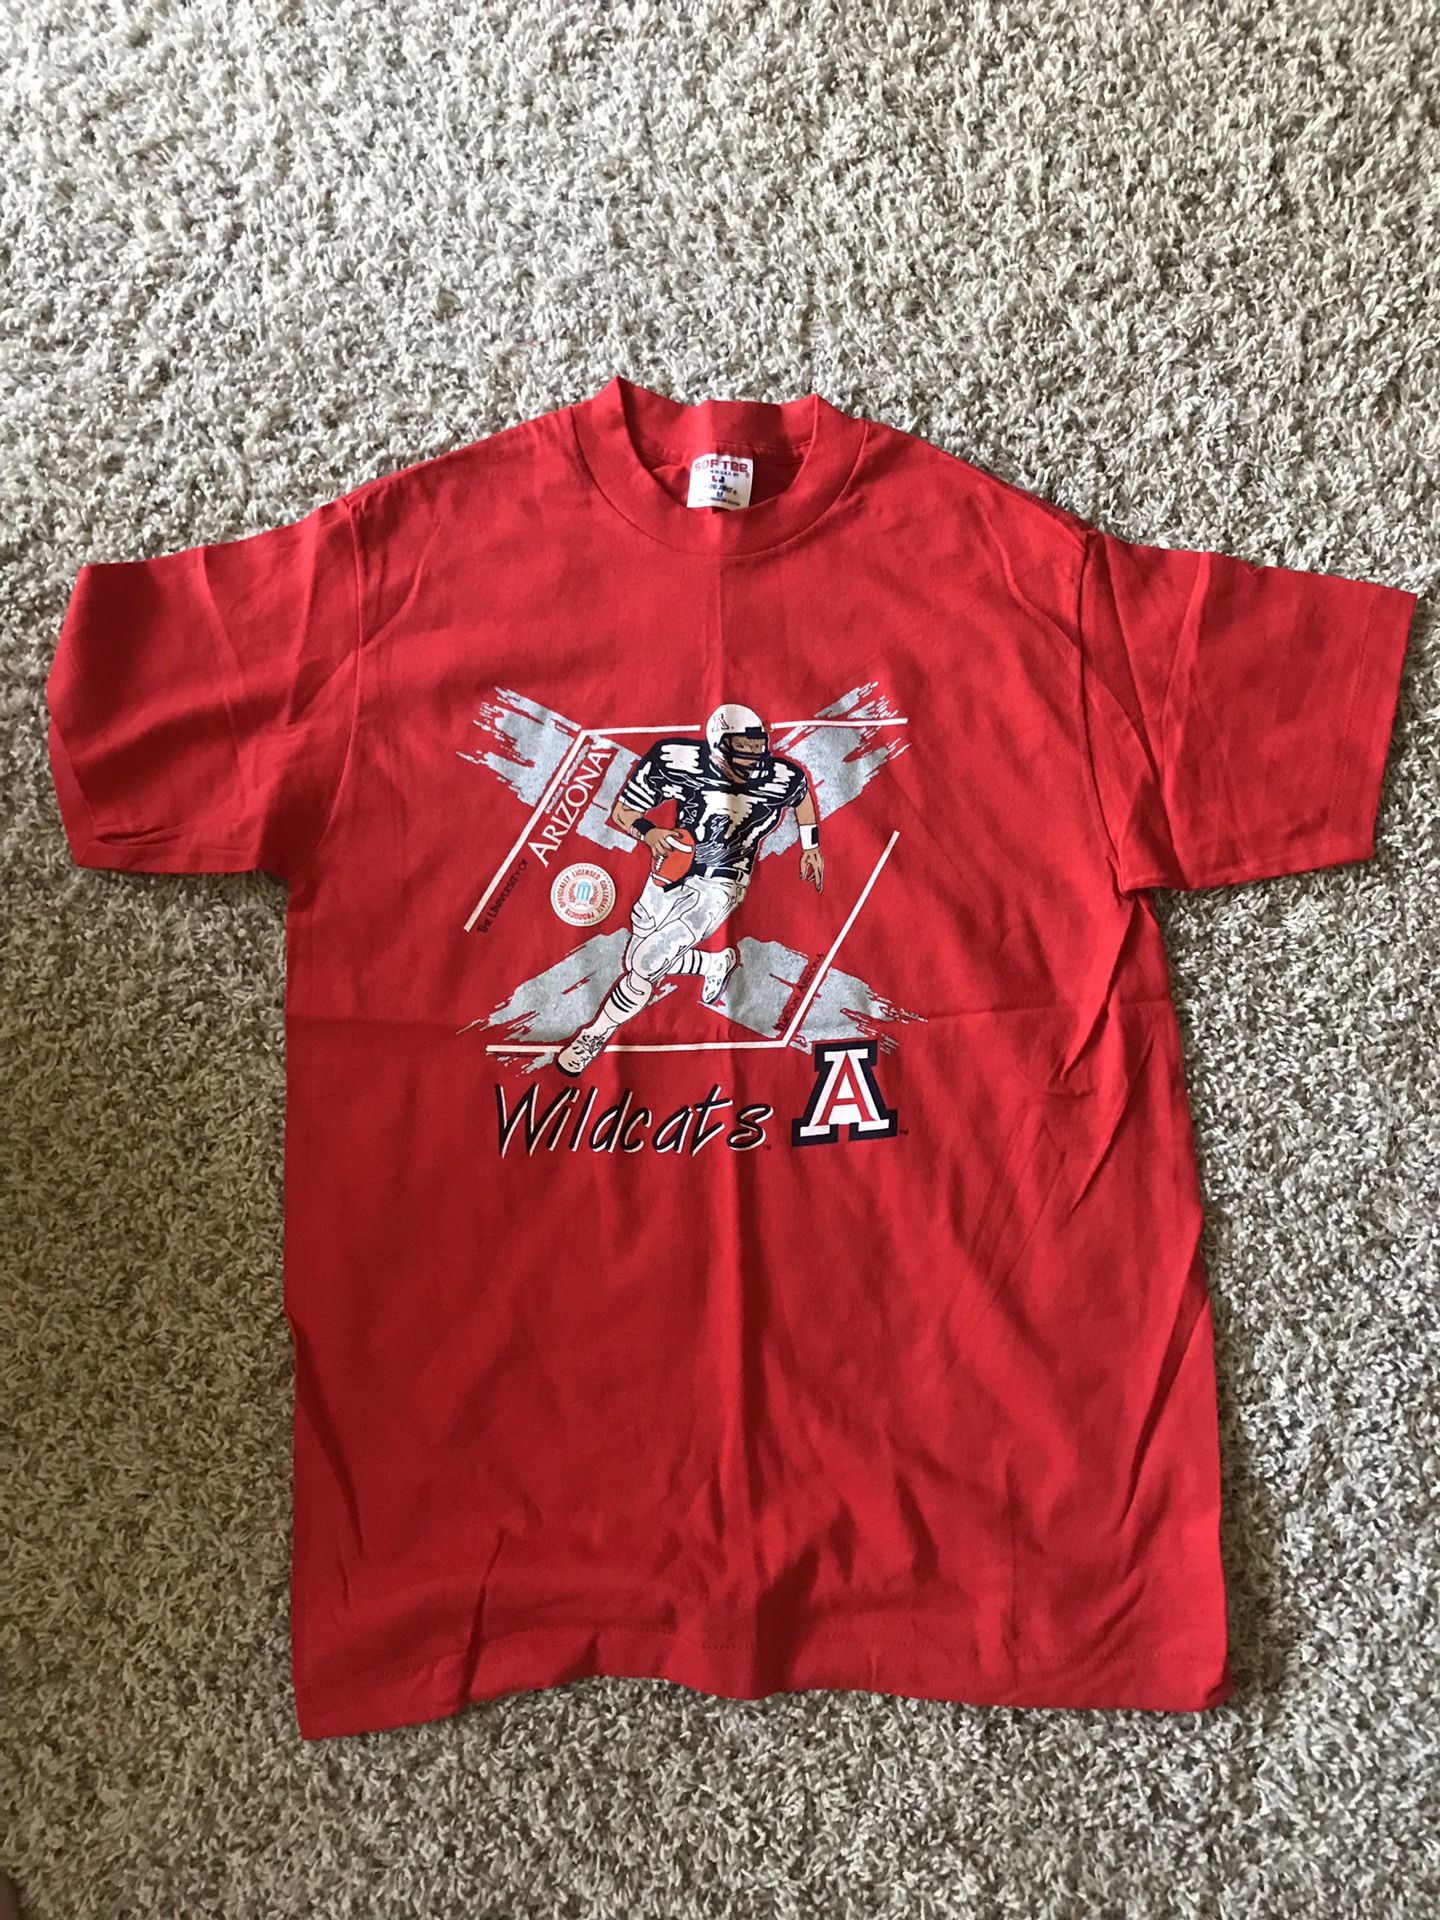 Vintage Arizona wildcats t shirt